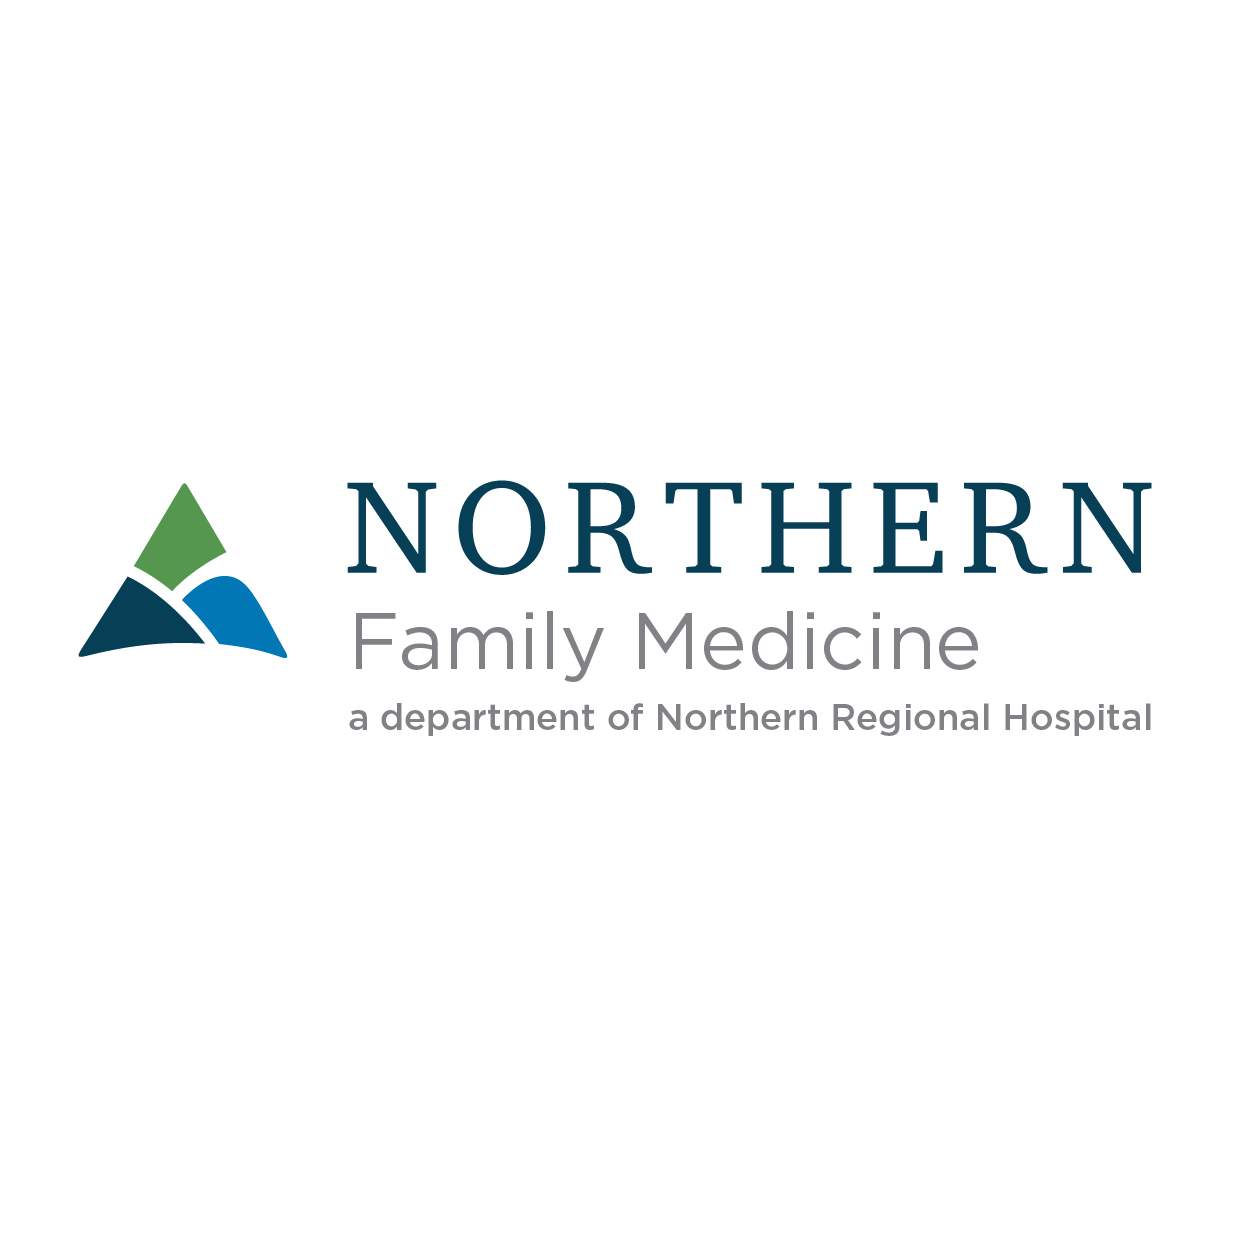 Northern Family Medicine